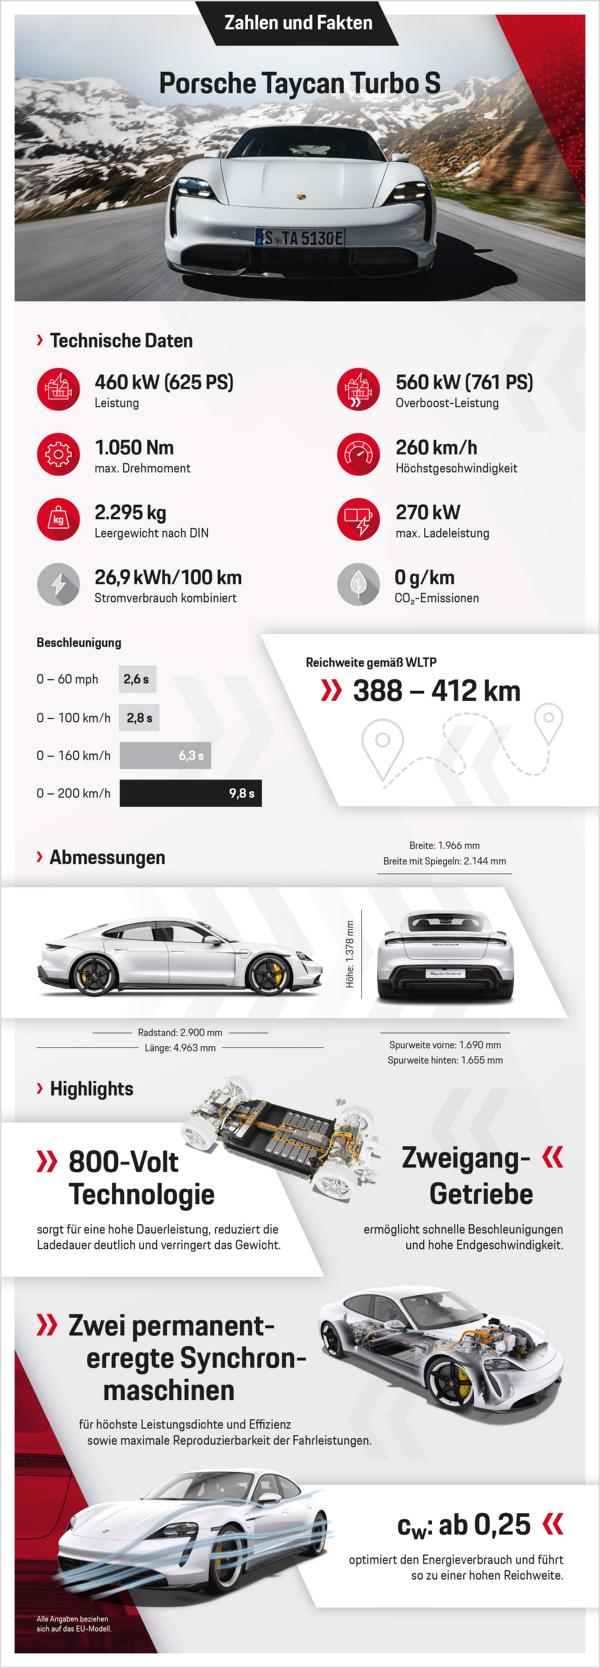 Porsche Taycan Turbo S 2019 Elektro Tuning 24